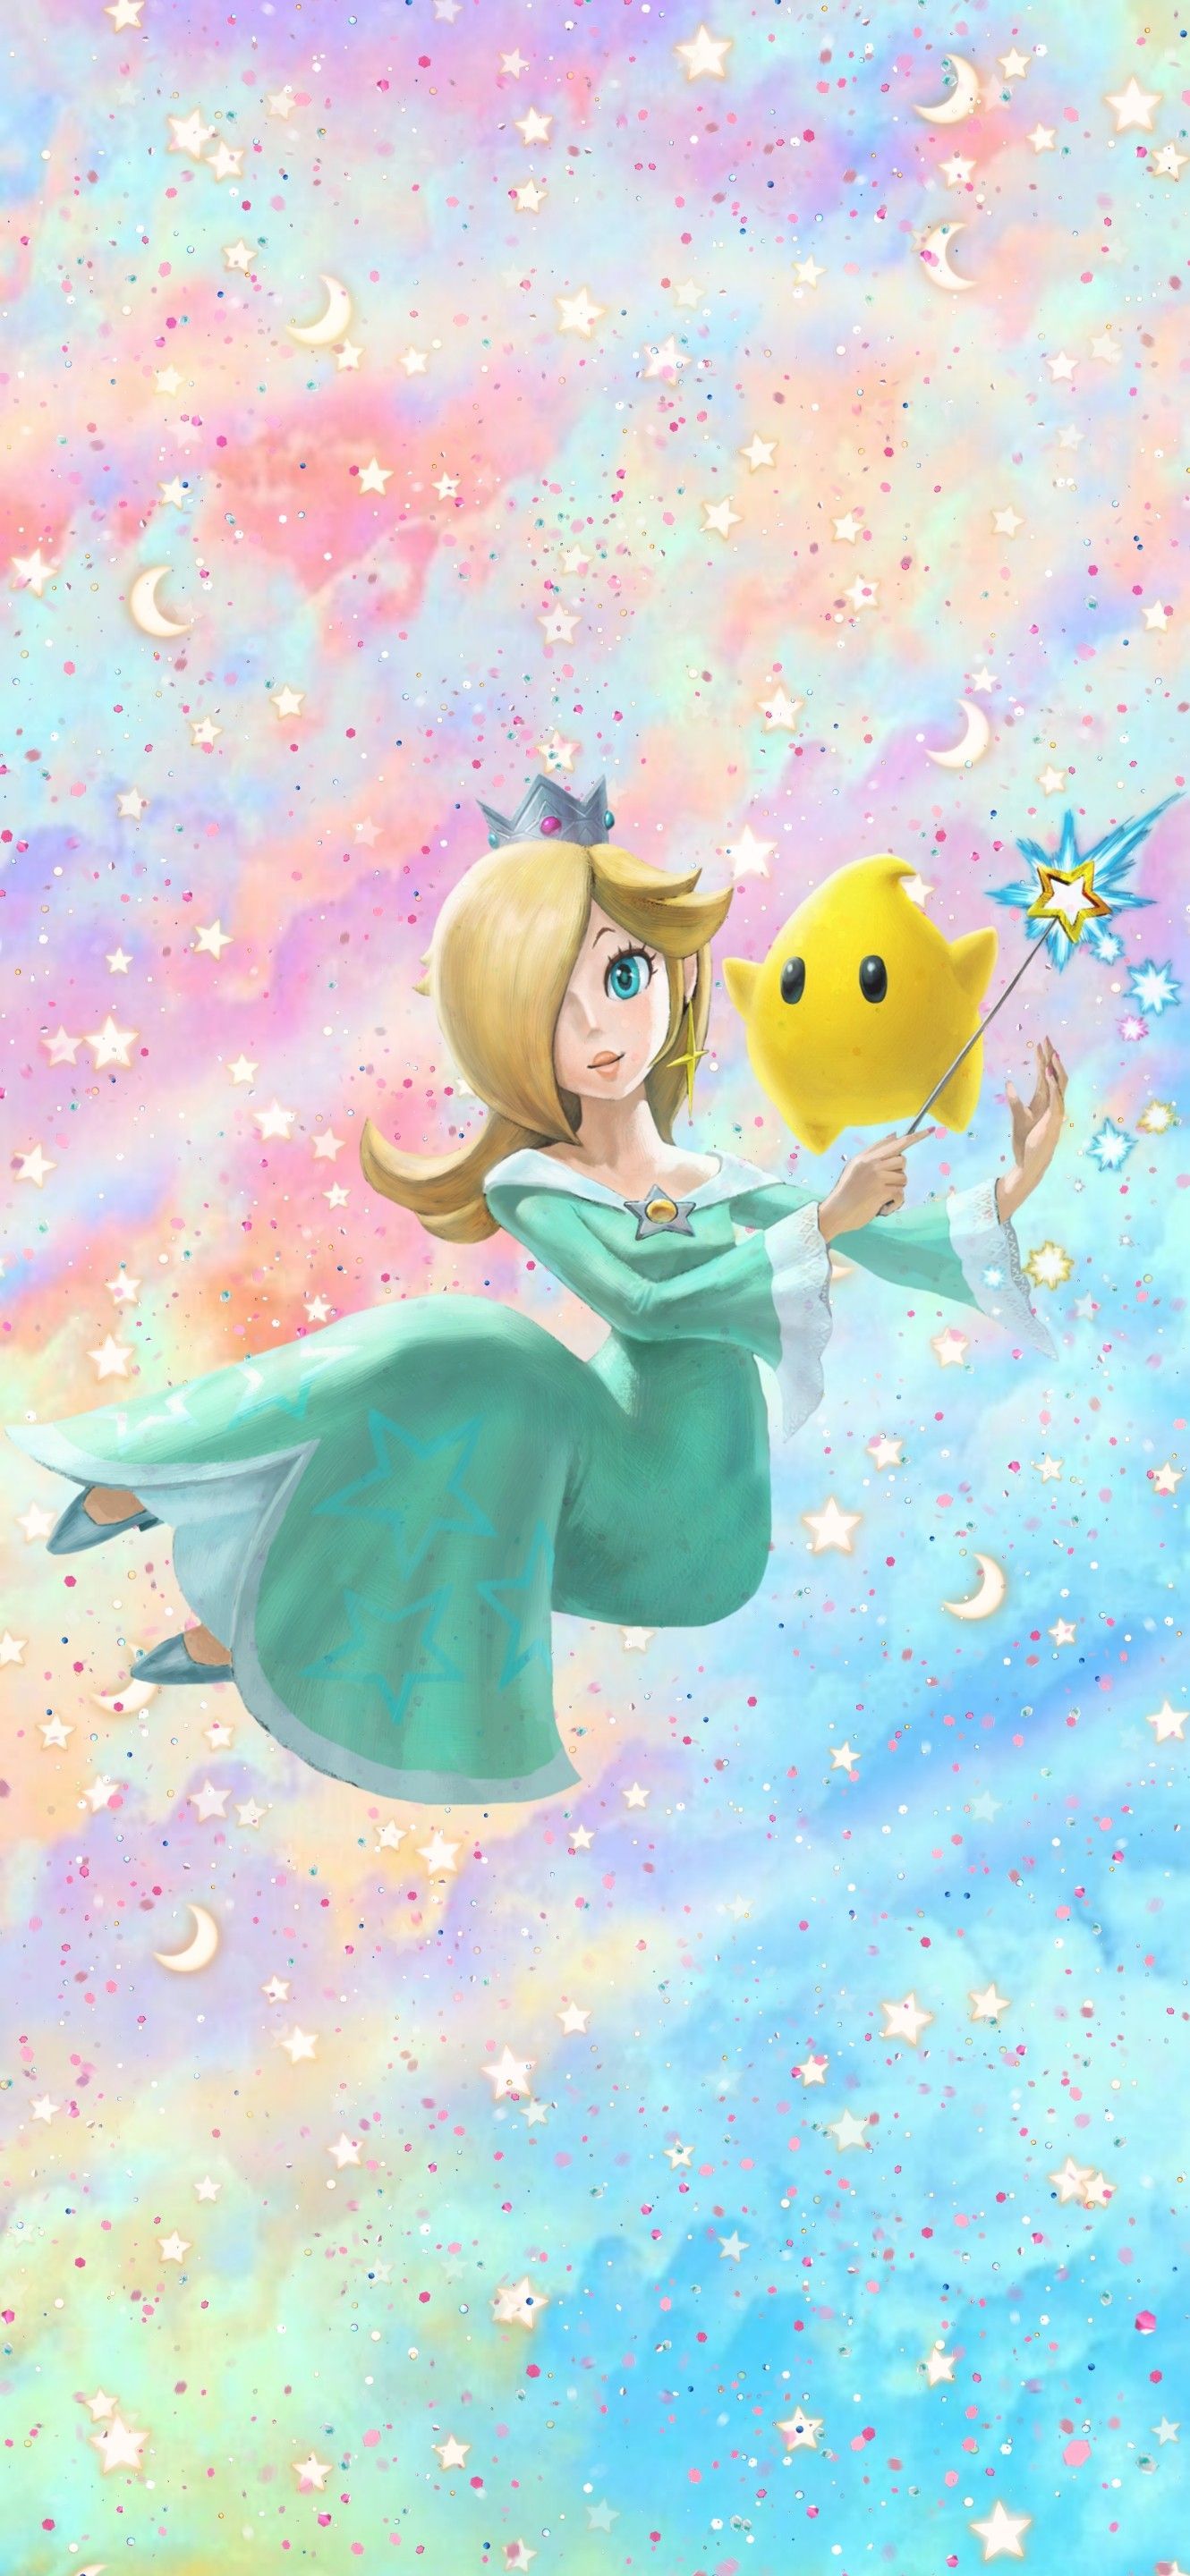 Nintendo Princess Rosalina blue aesthetic phone wallpaper. Wallpaper, Nintendo princess, Cute wallpaper